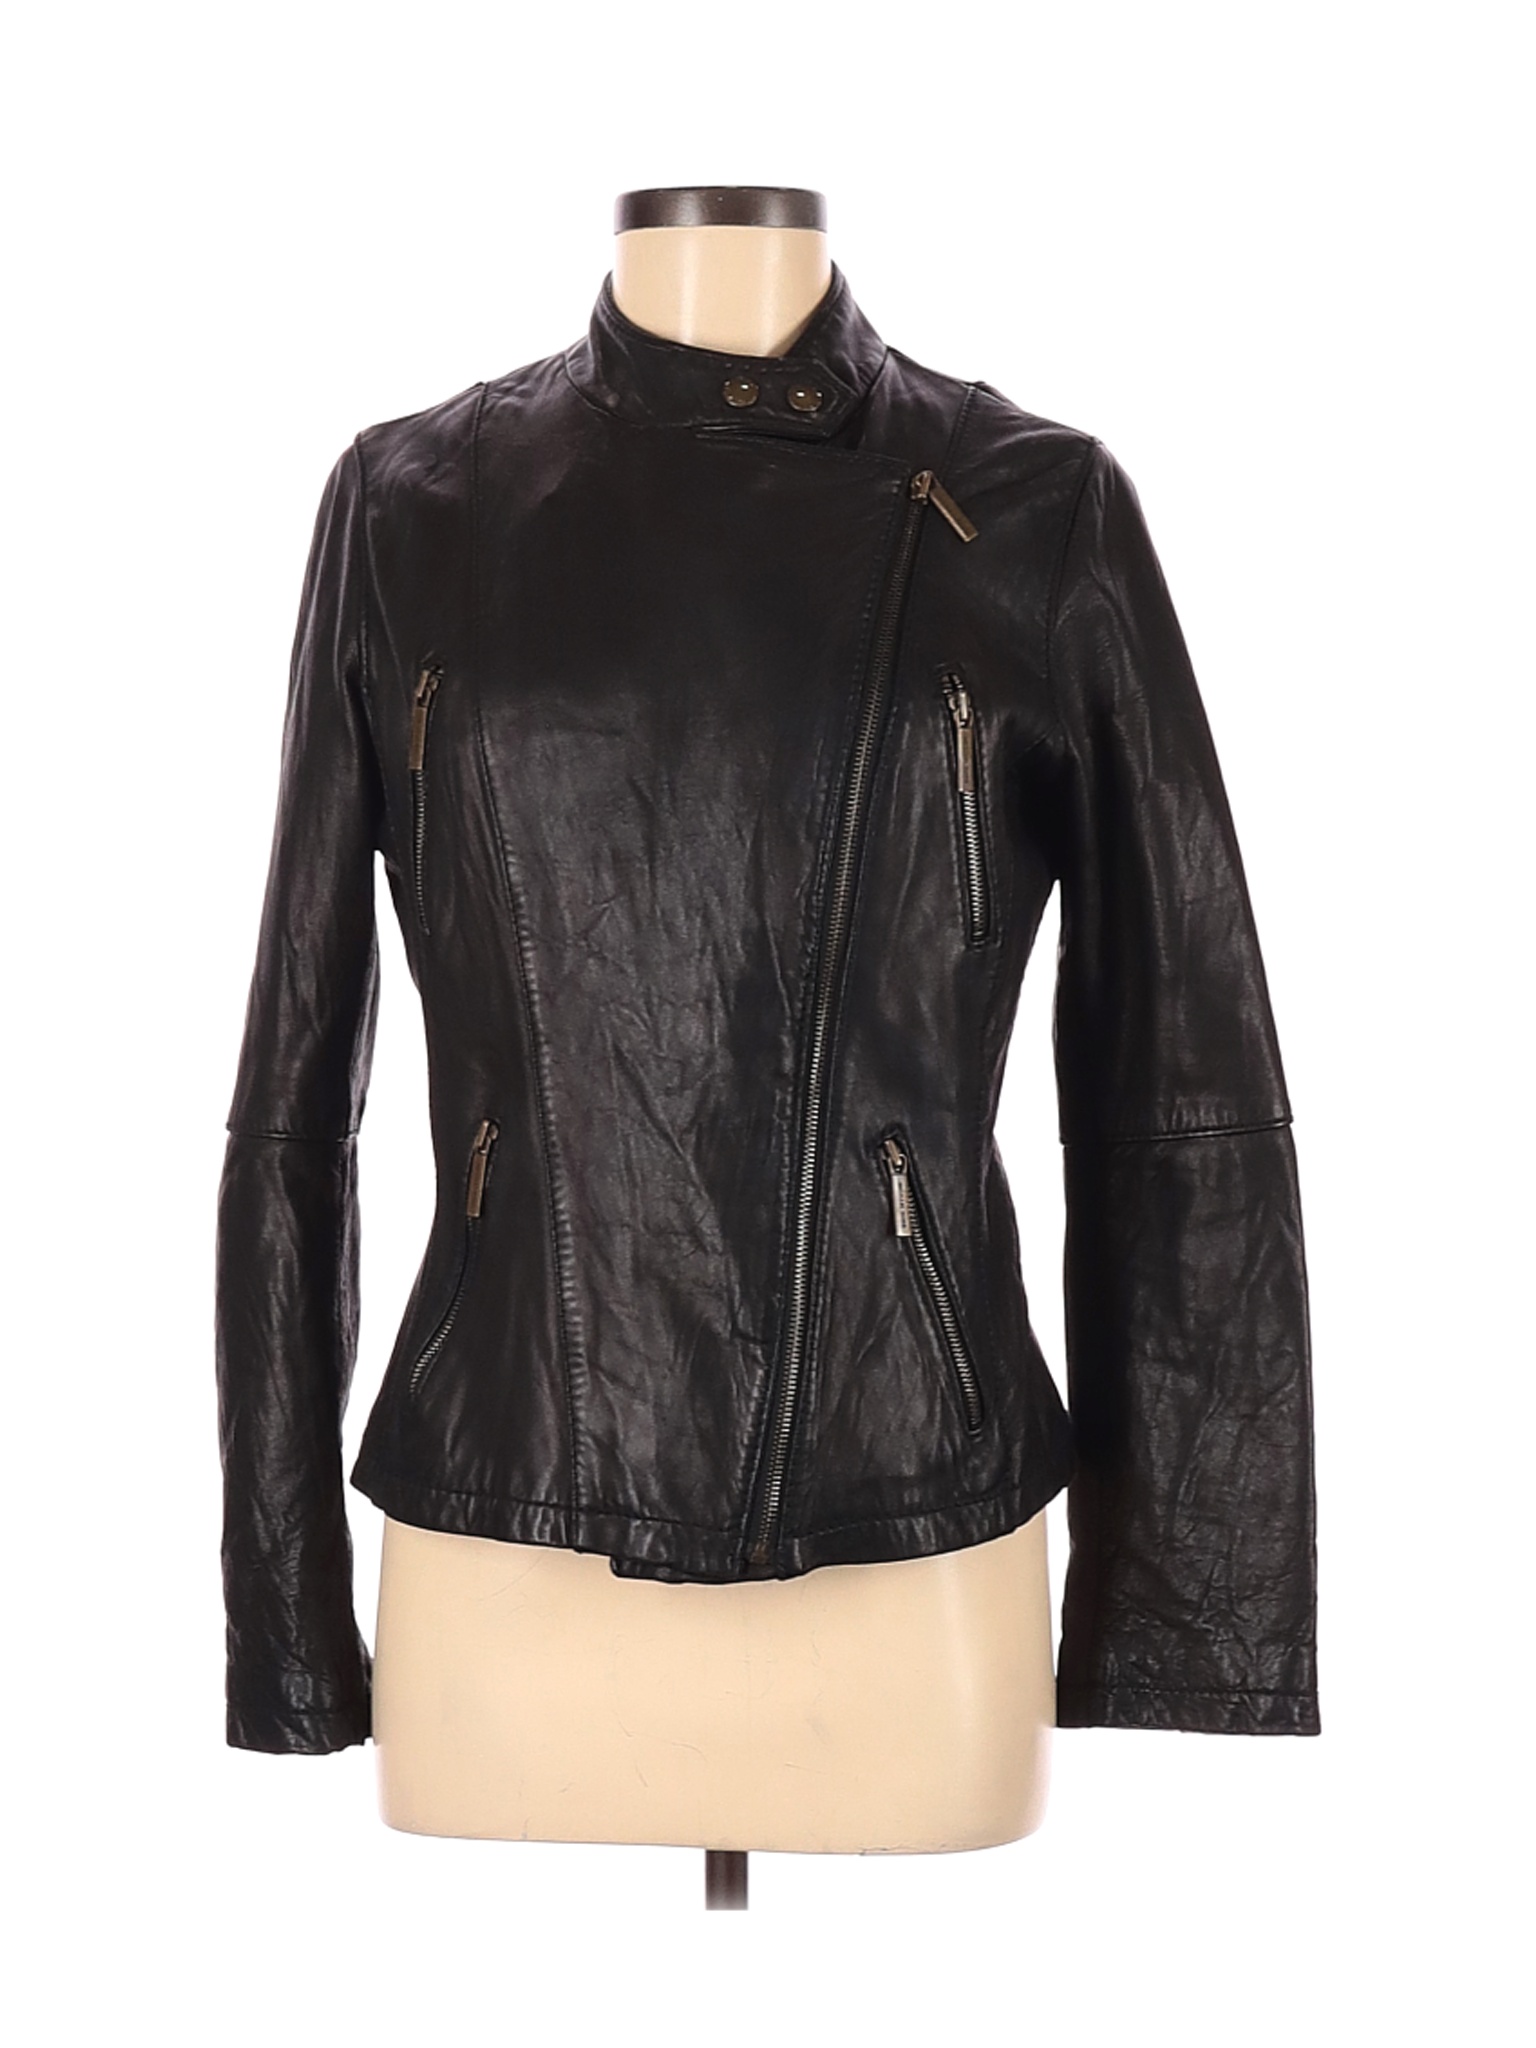 MICHAEL Michael Kors Women Black Leather Jacket M | eBay